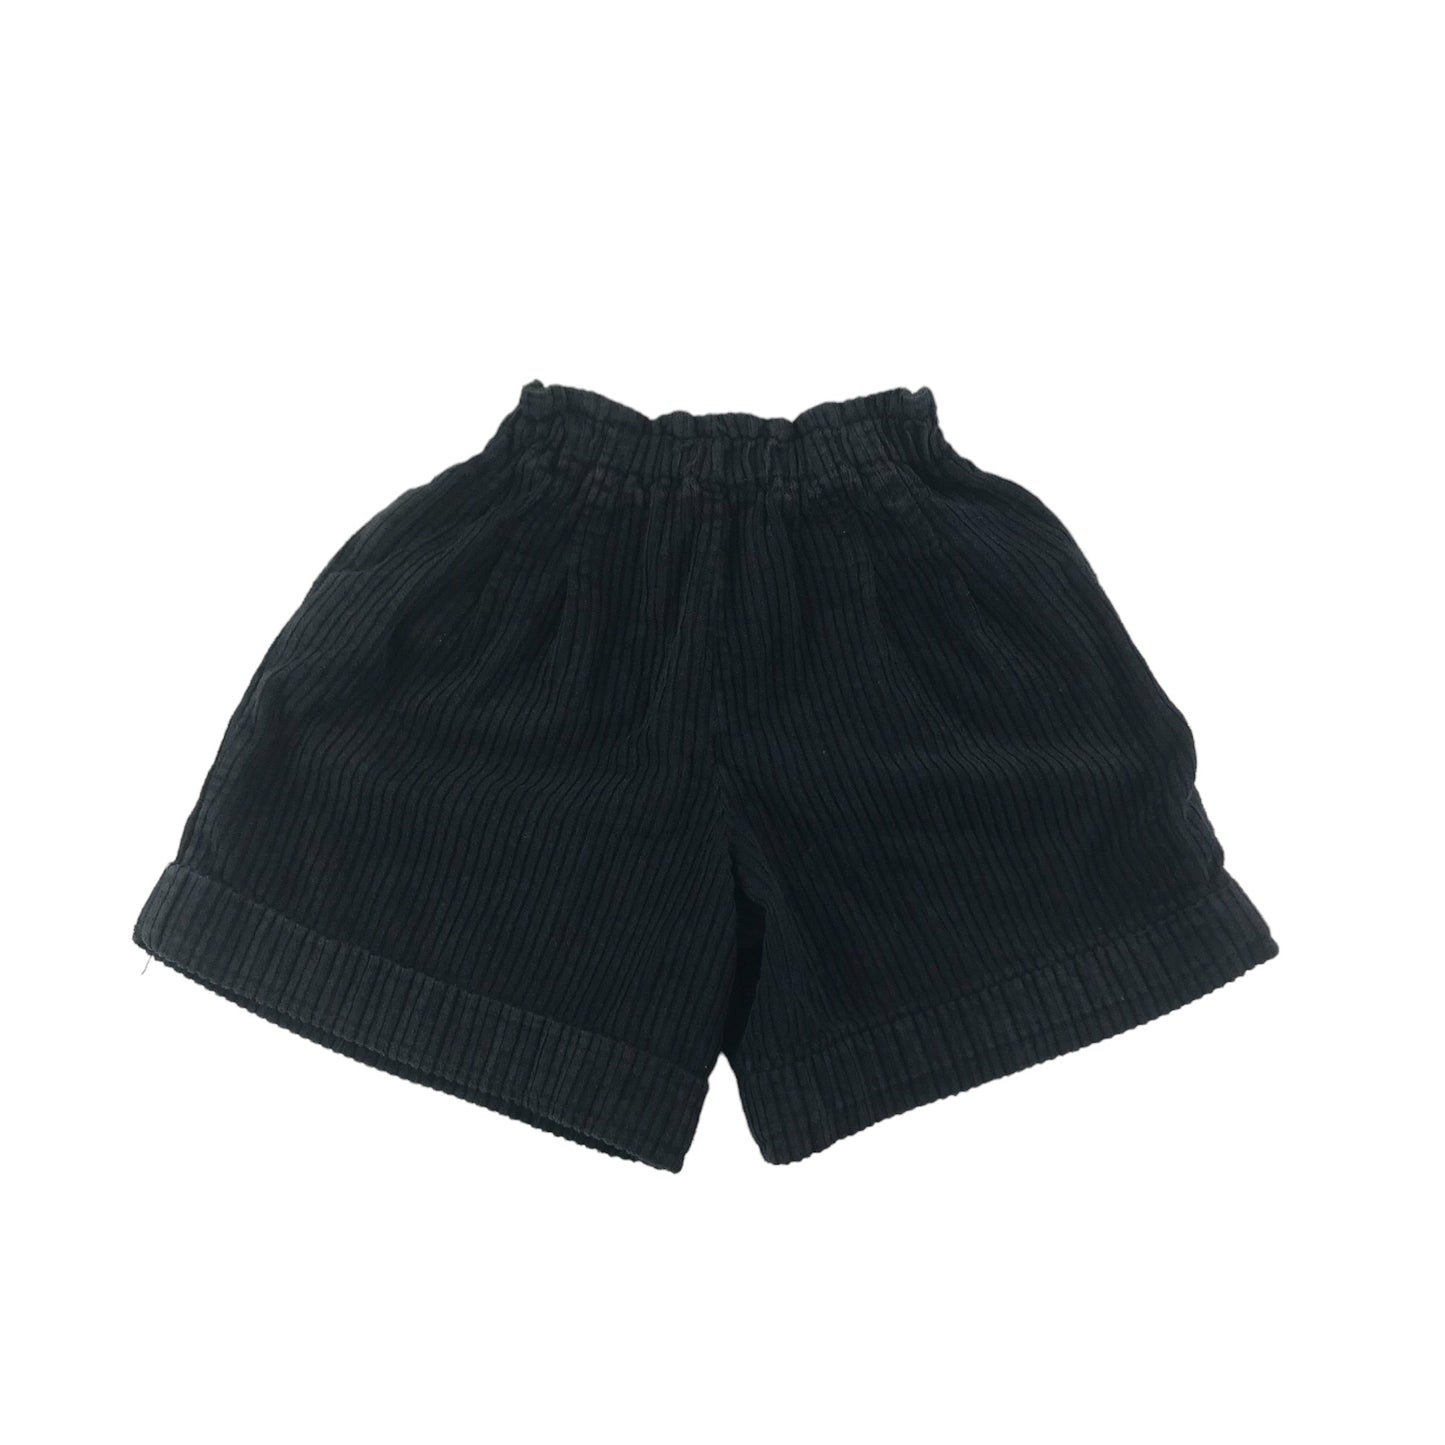 Zara Shorts Age 6-7 Black Corduroy Style Flared Cotton